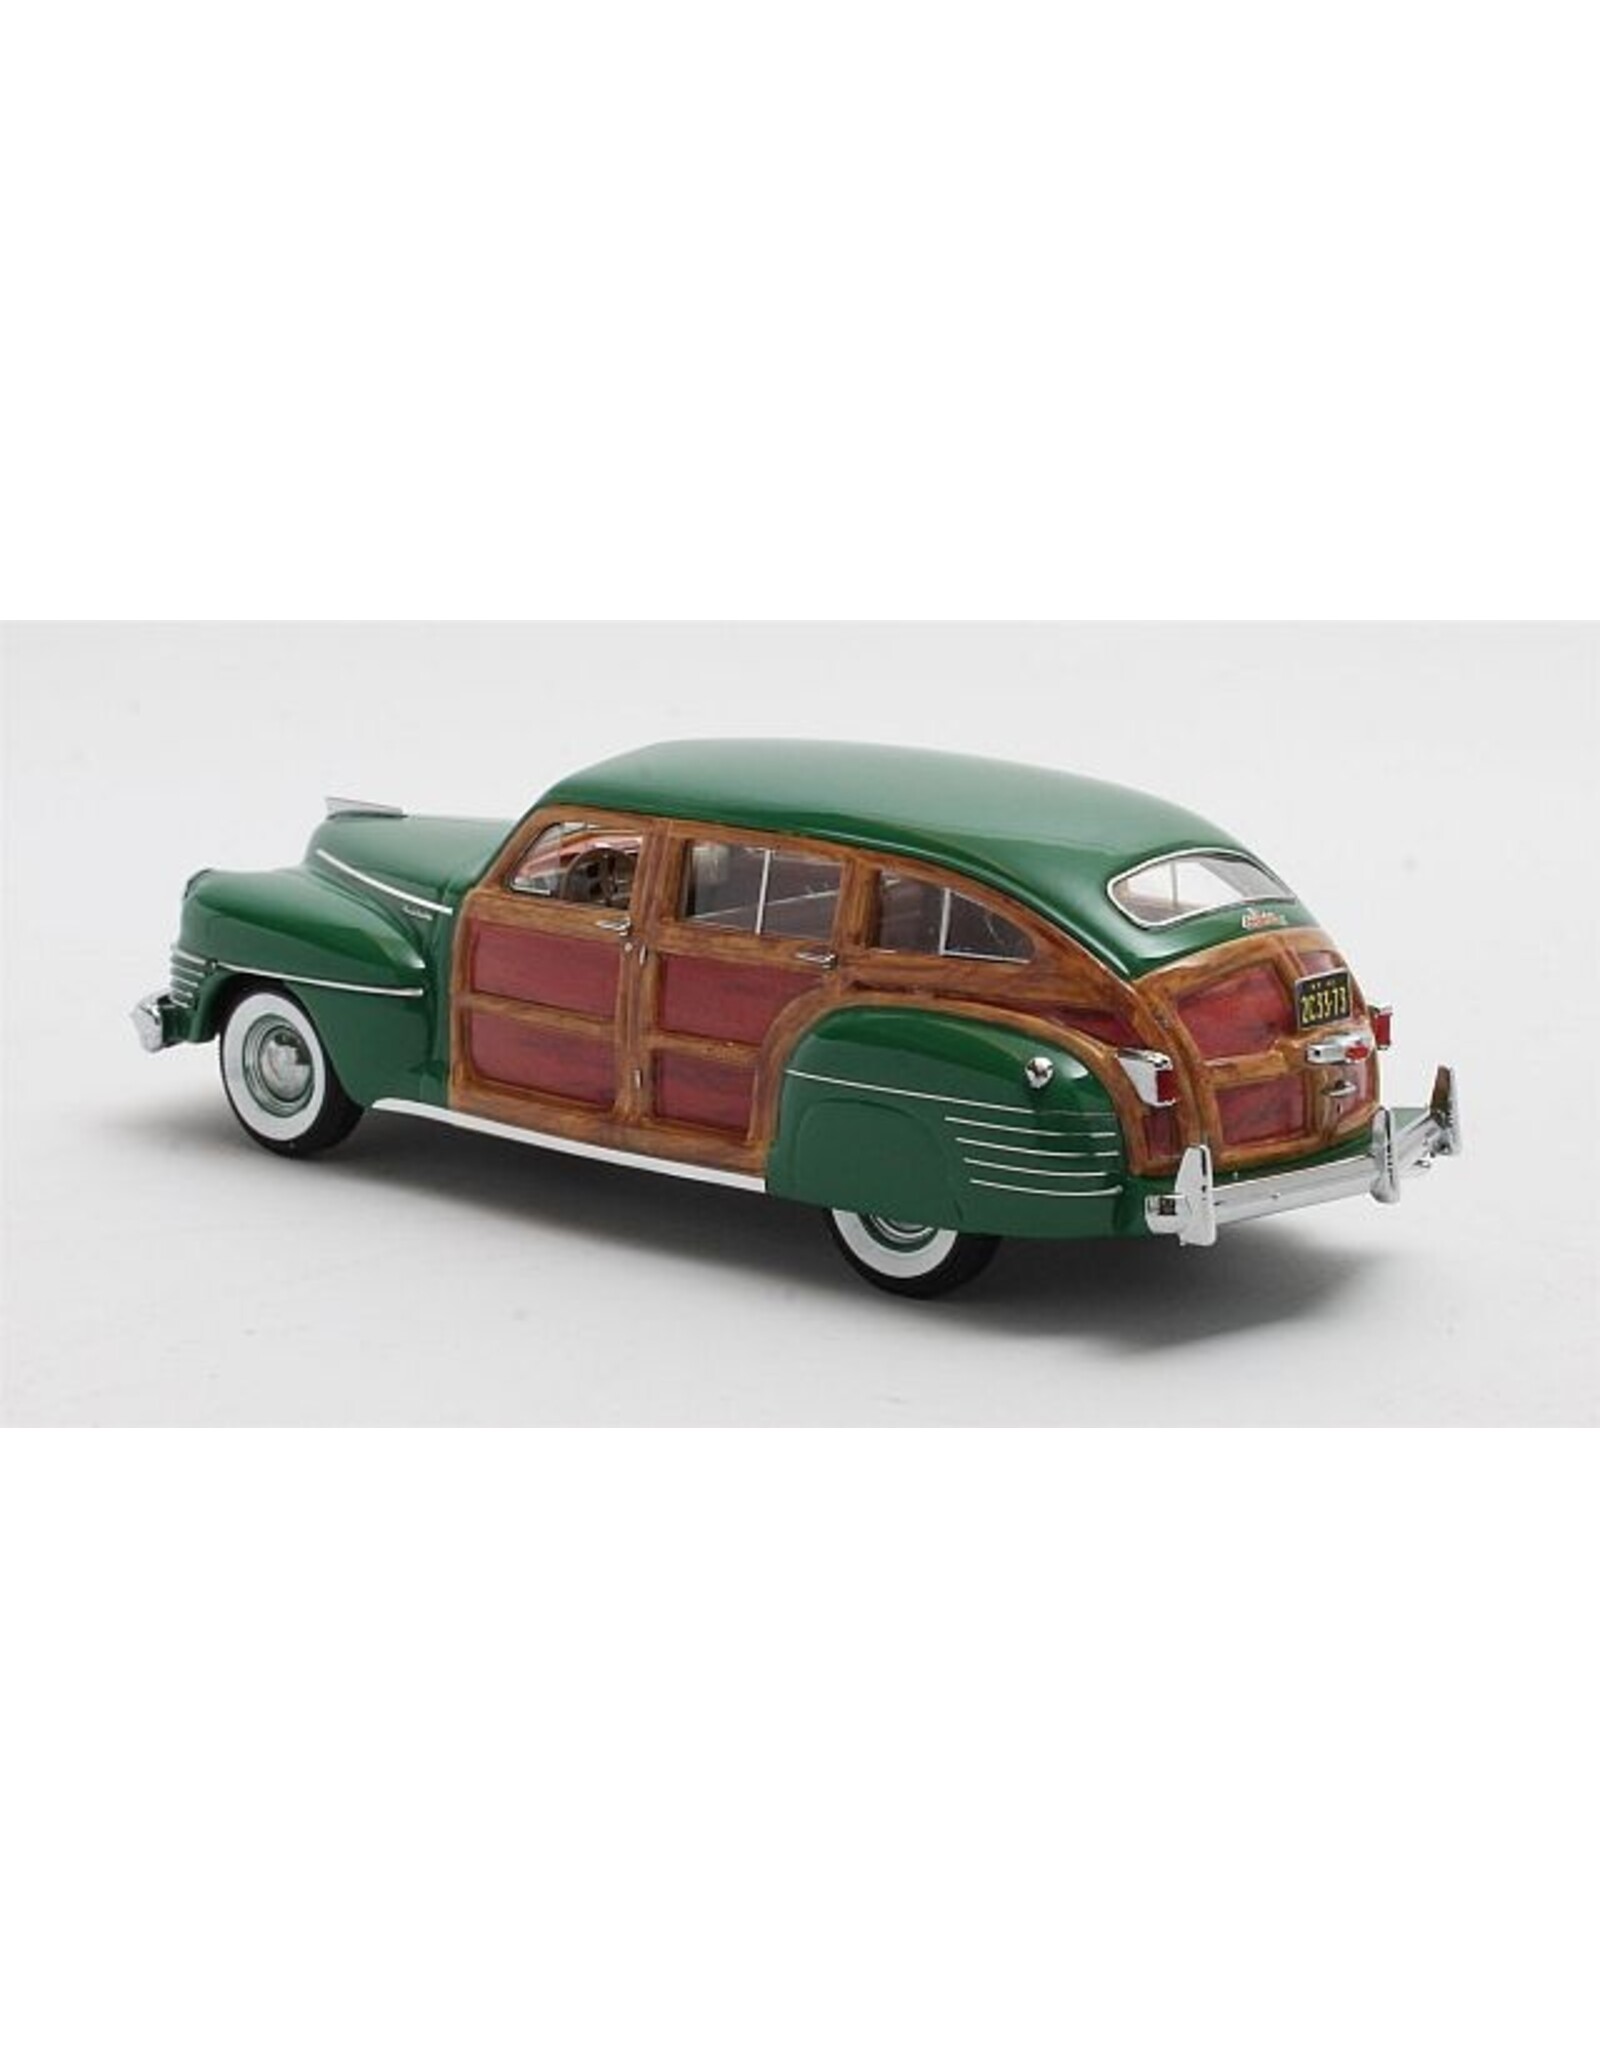 Chrysler Chrysler Town & Country Wagon(1942)green